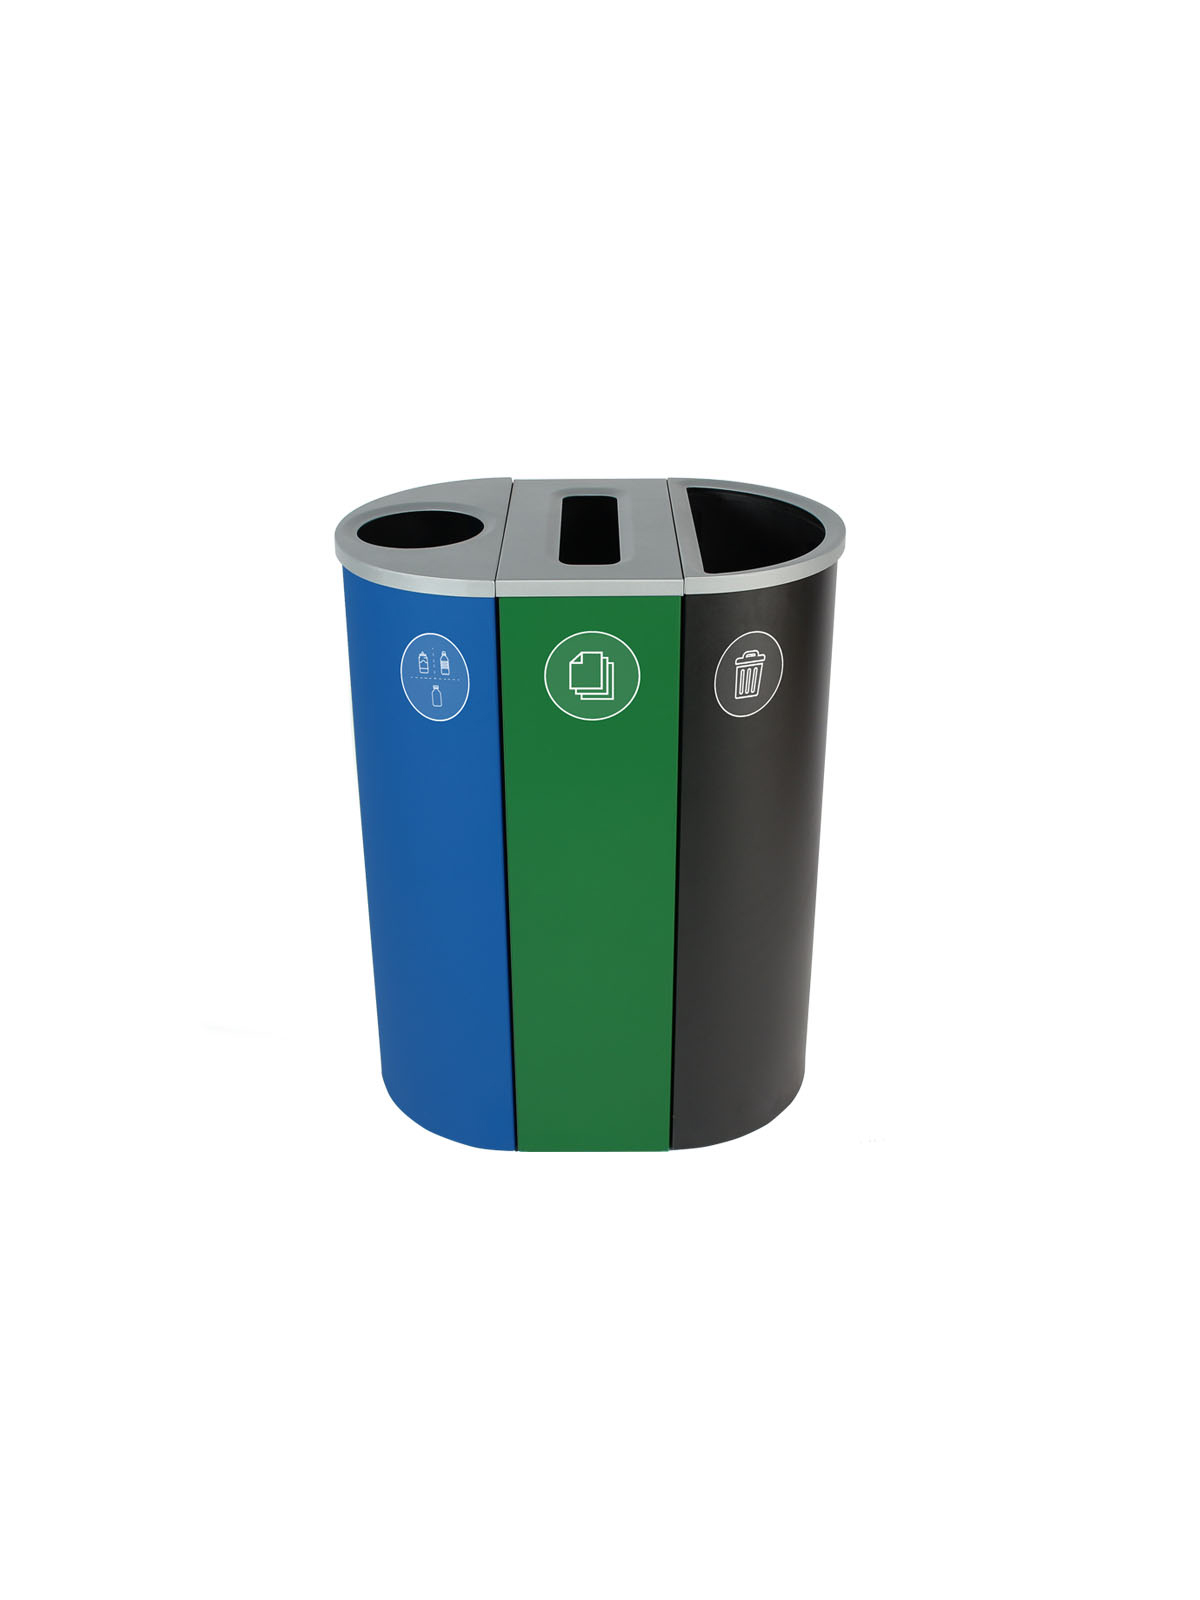 SPECTRUM -三重-纽约市合规-金属，玻璃，塑料和饮料容器-纸-垃圾-圆圈-槽-全-蓝-绿-黑标题=